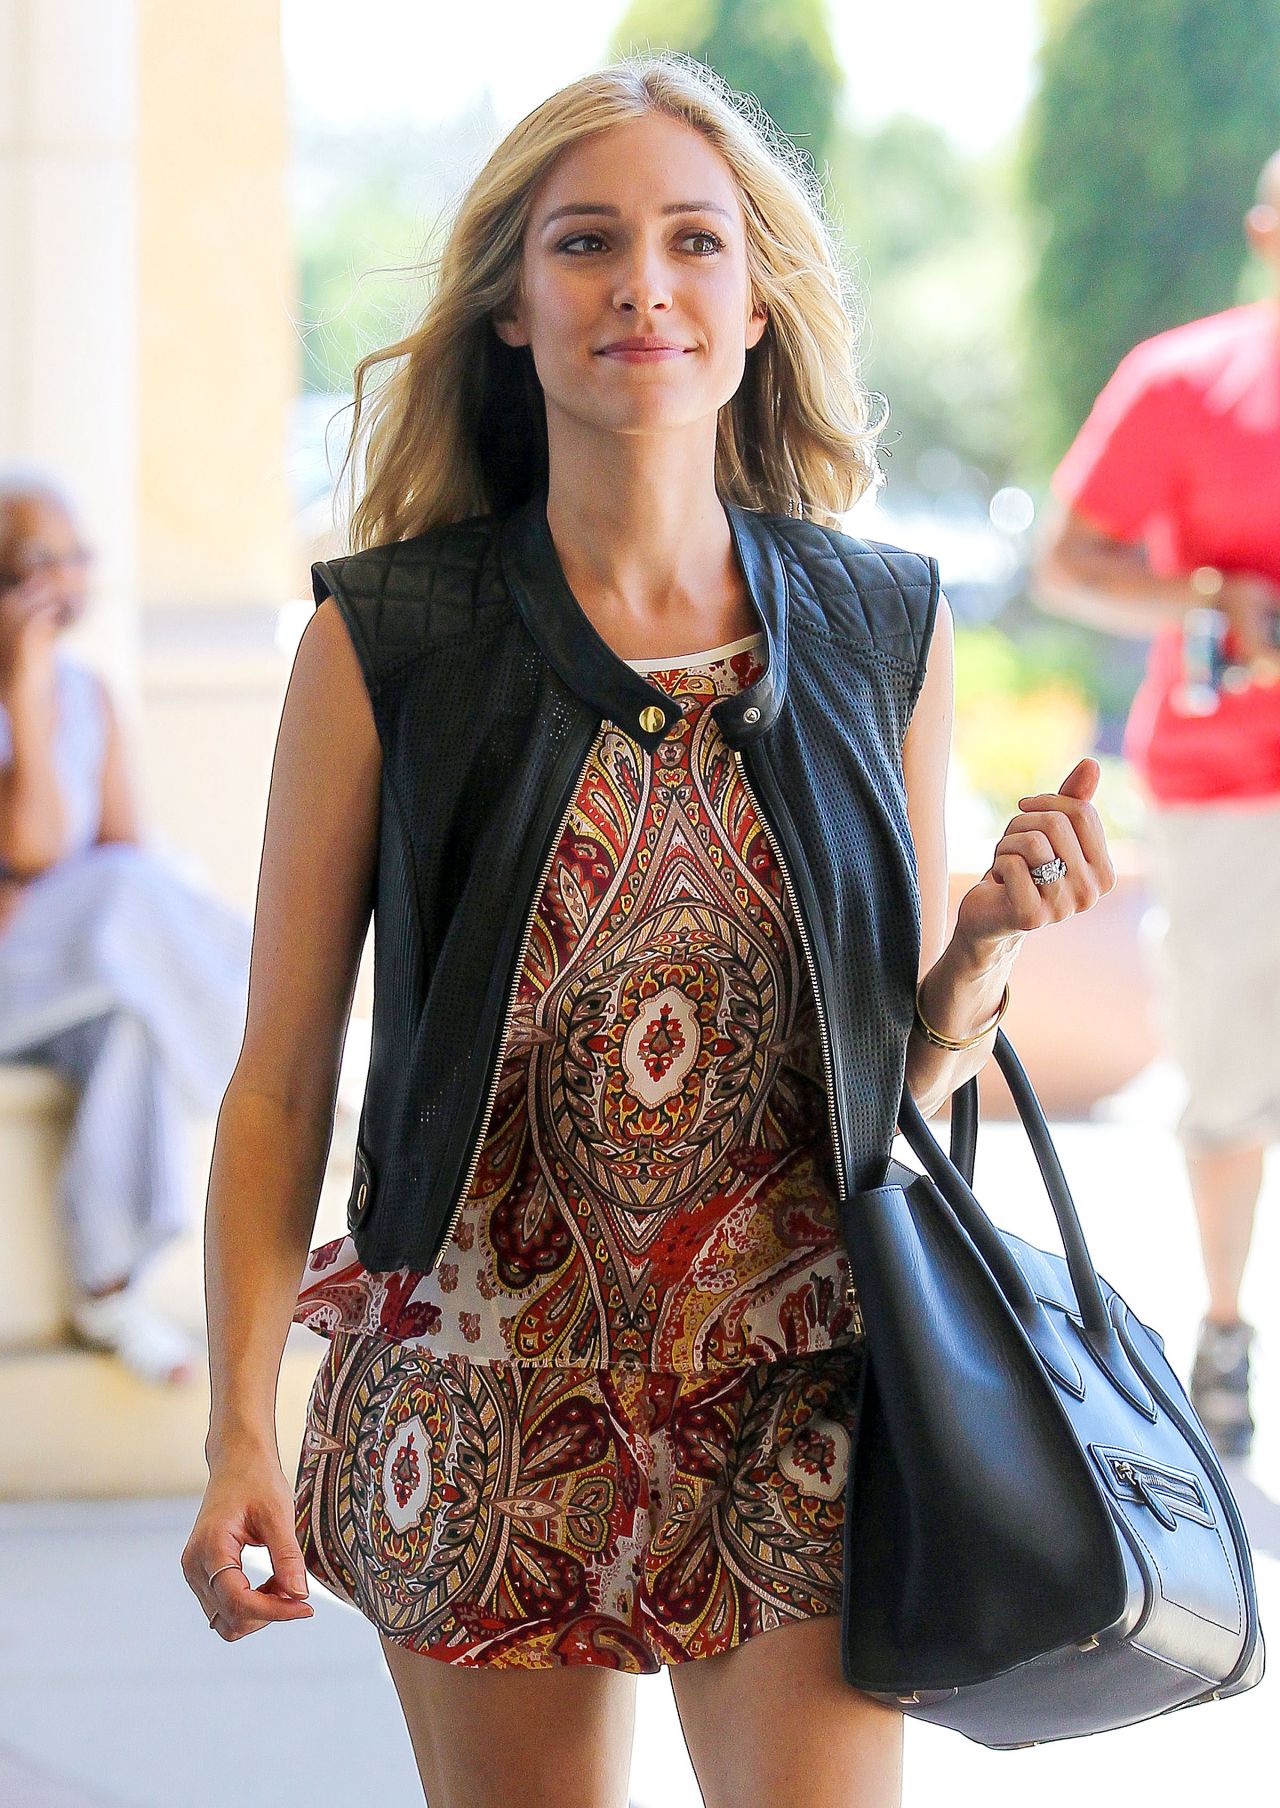 Kristin Cavallari Shows Off Legs - Shopping in Beverly Hills - July 2014